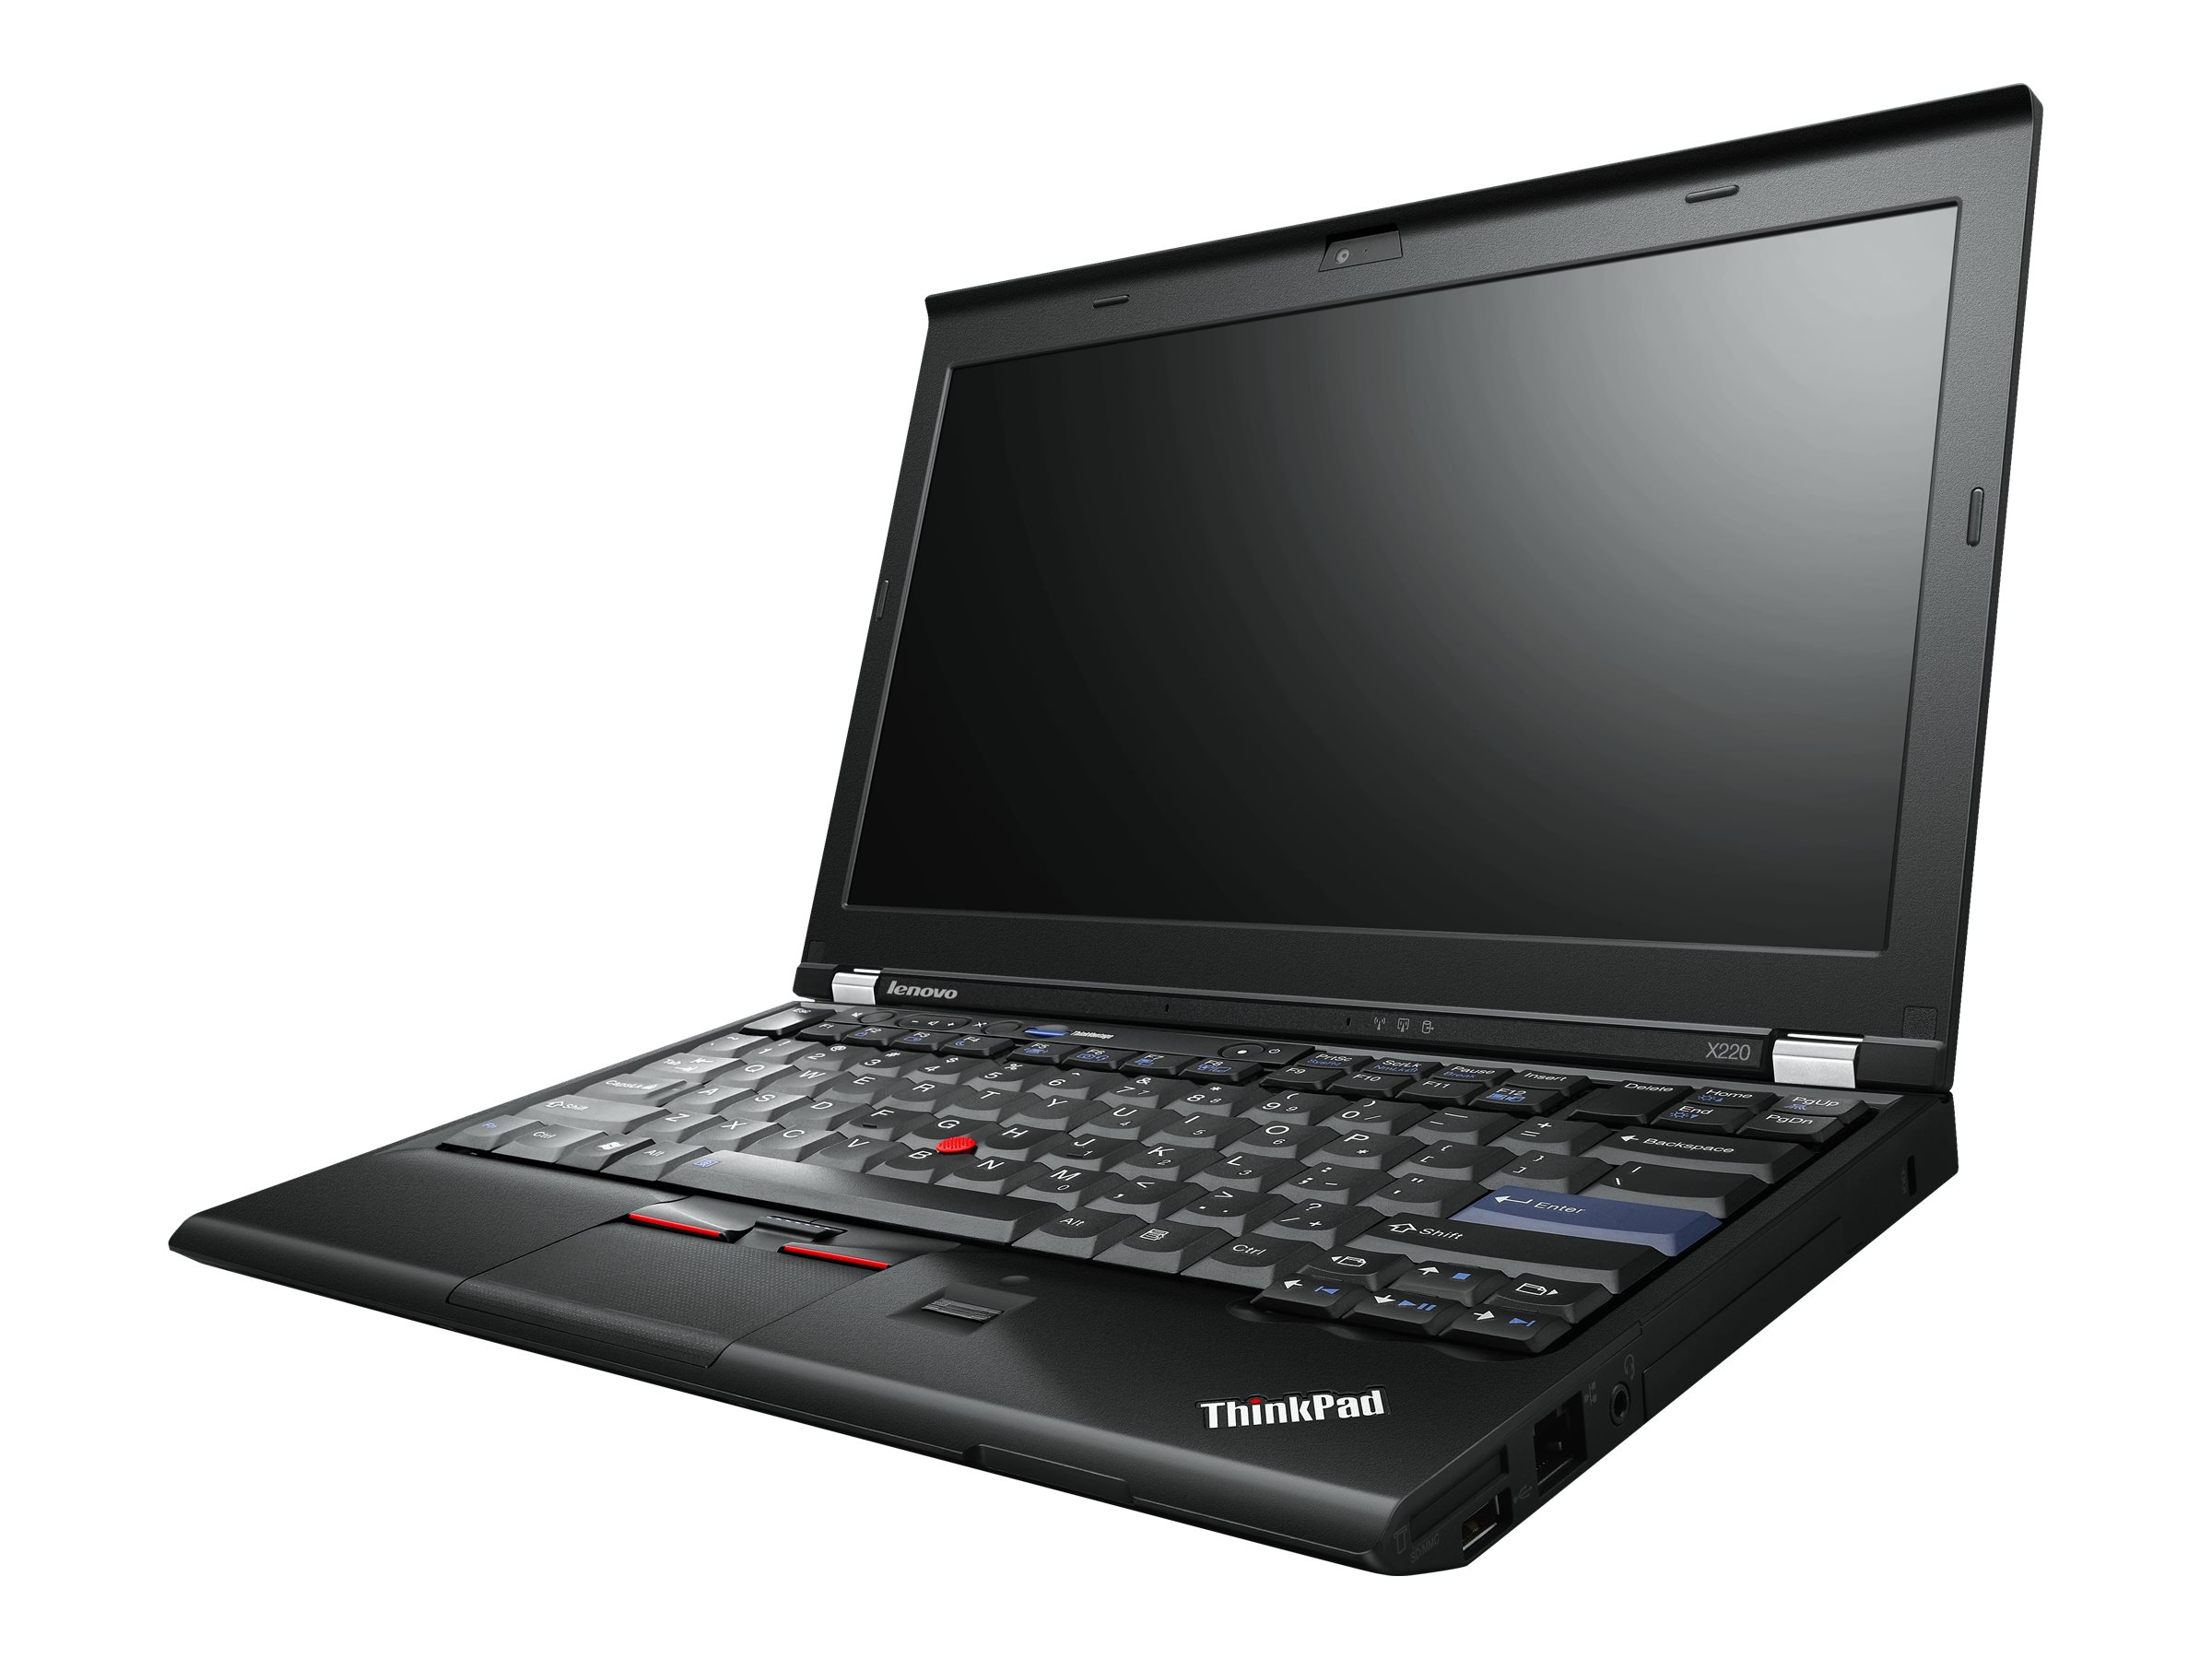 Lenovo ThinkPad X220 4291 | www.shi.com